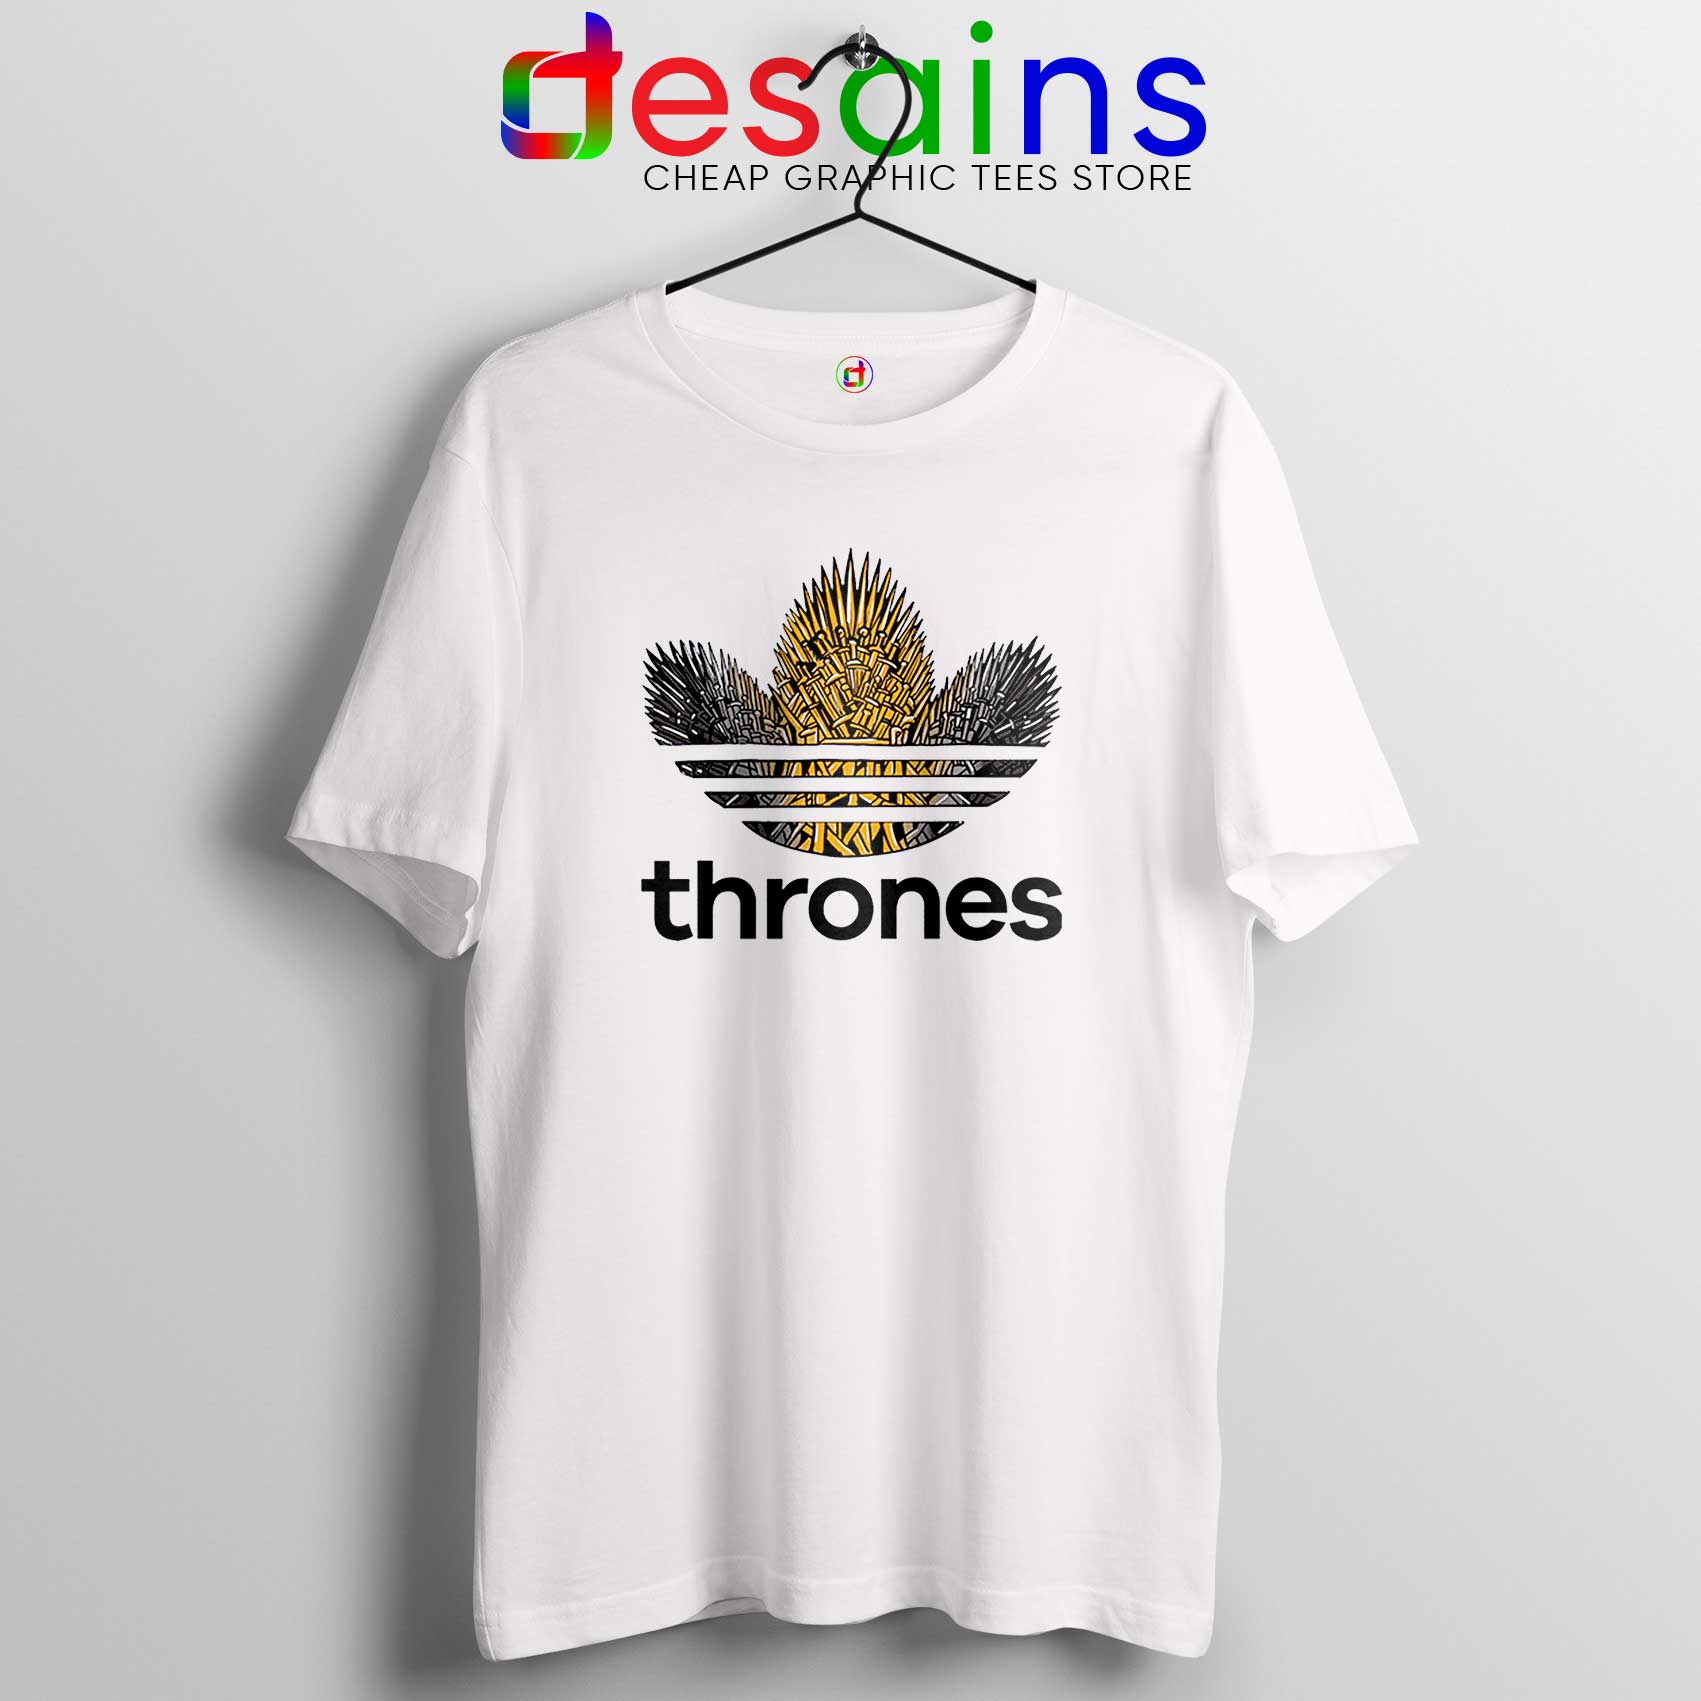 game of thrones adidas logo